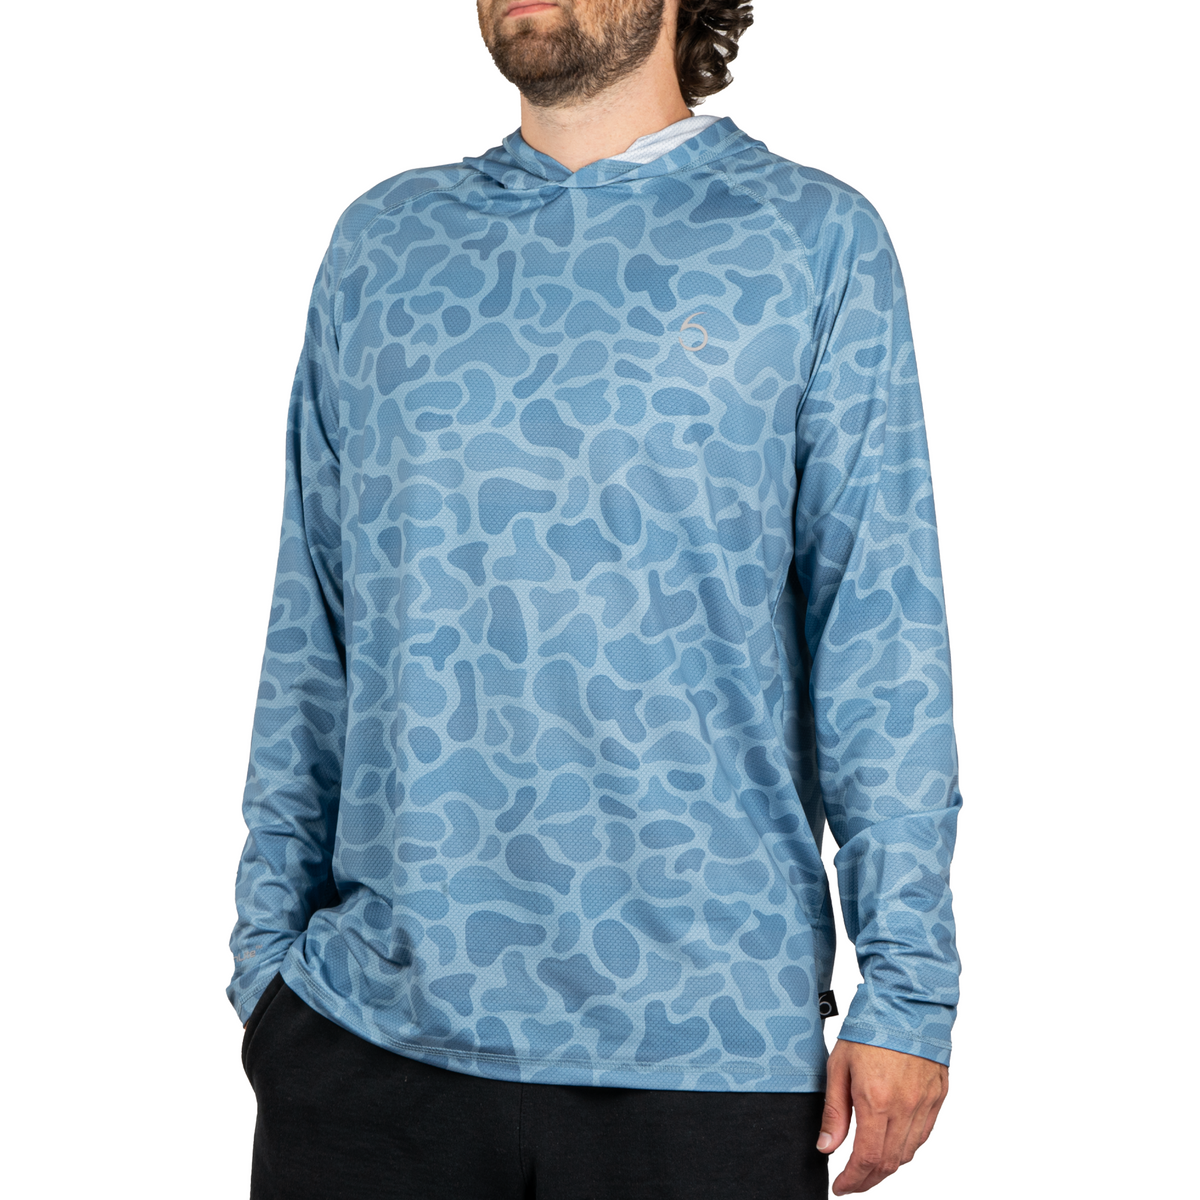 6th Sense Fishing - FishLite Hooded Sun Shirt